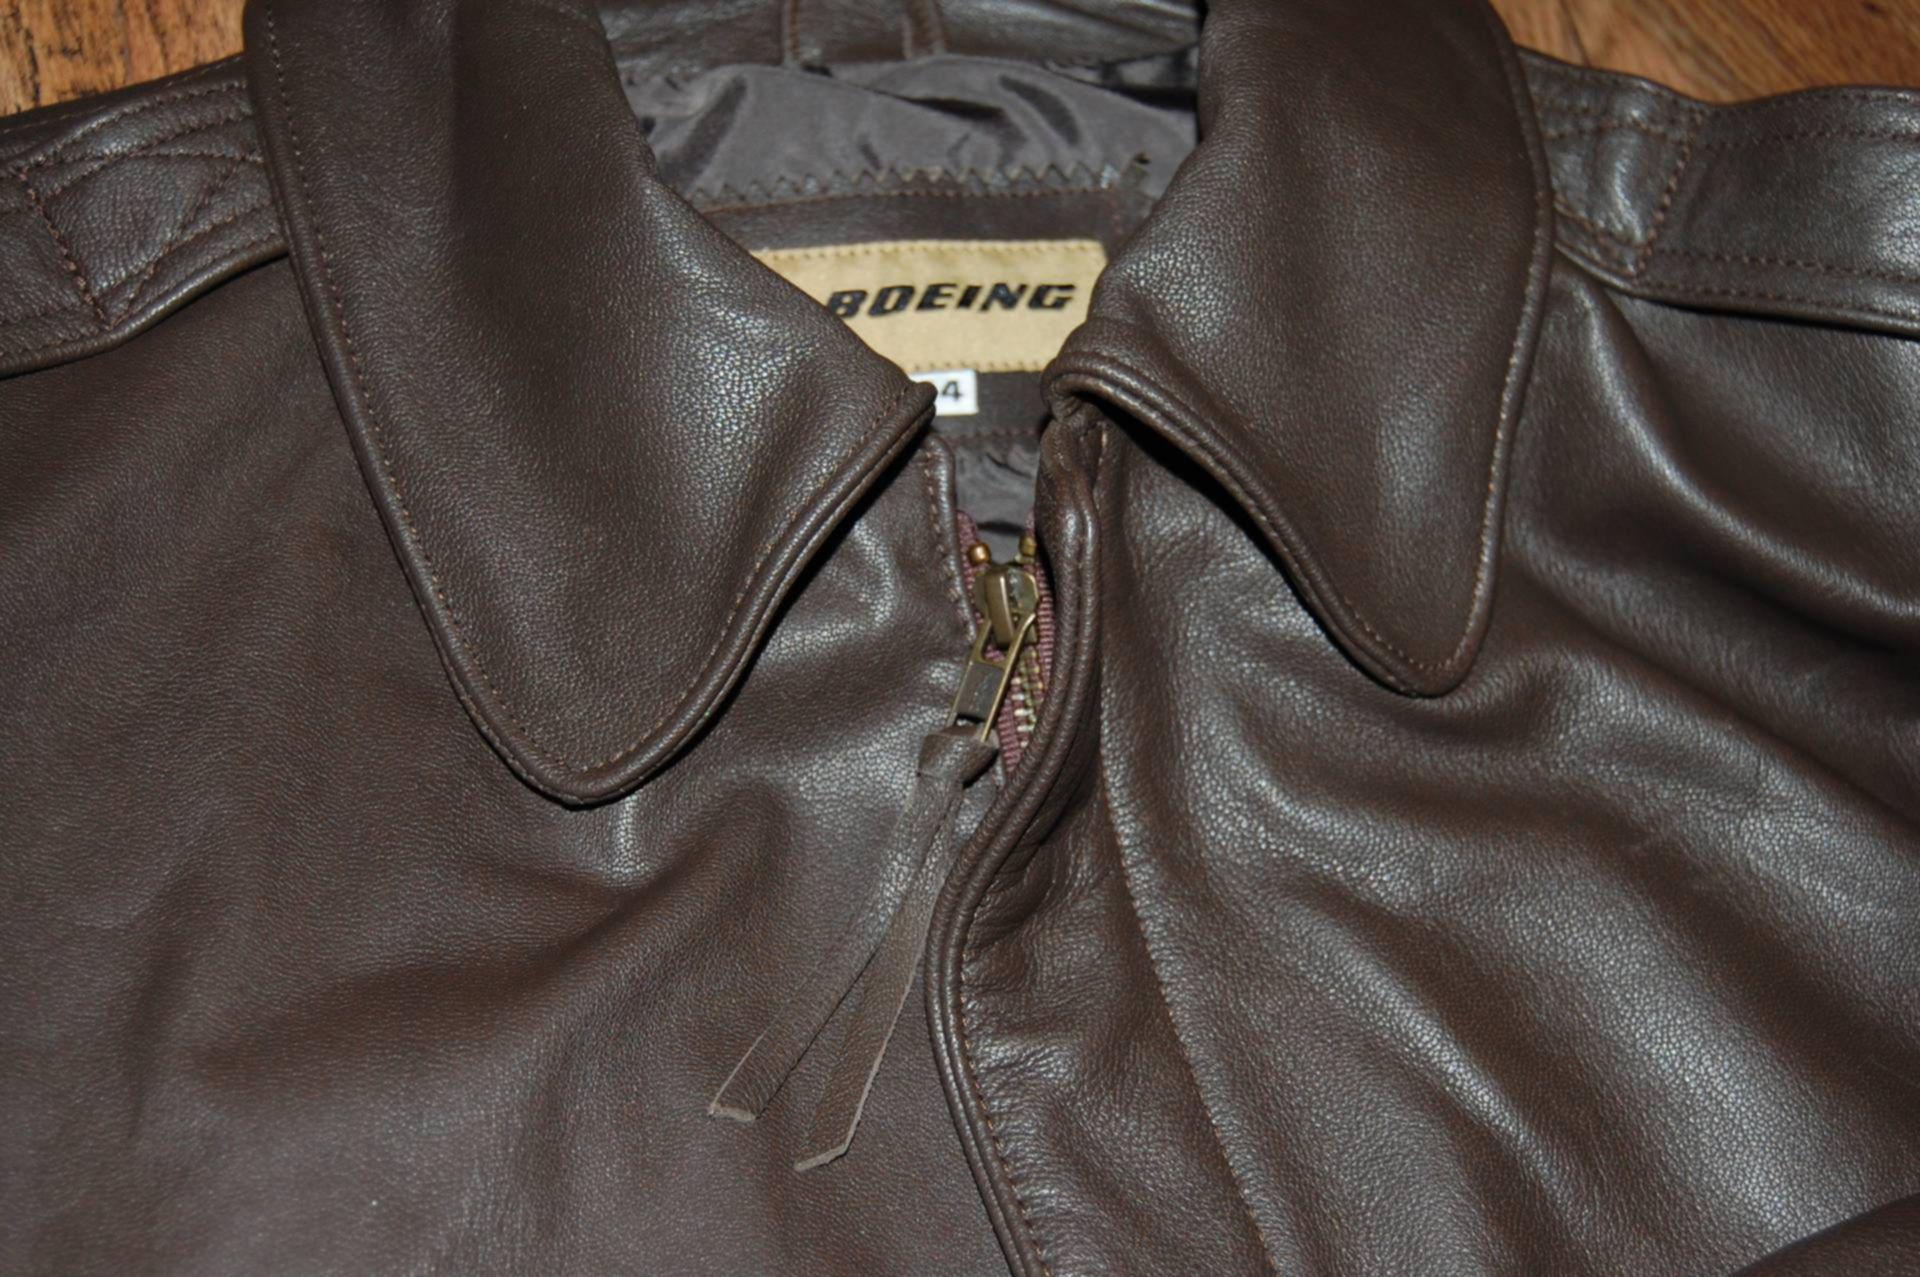 Пошив кожаных курток на заказ в москве цены